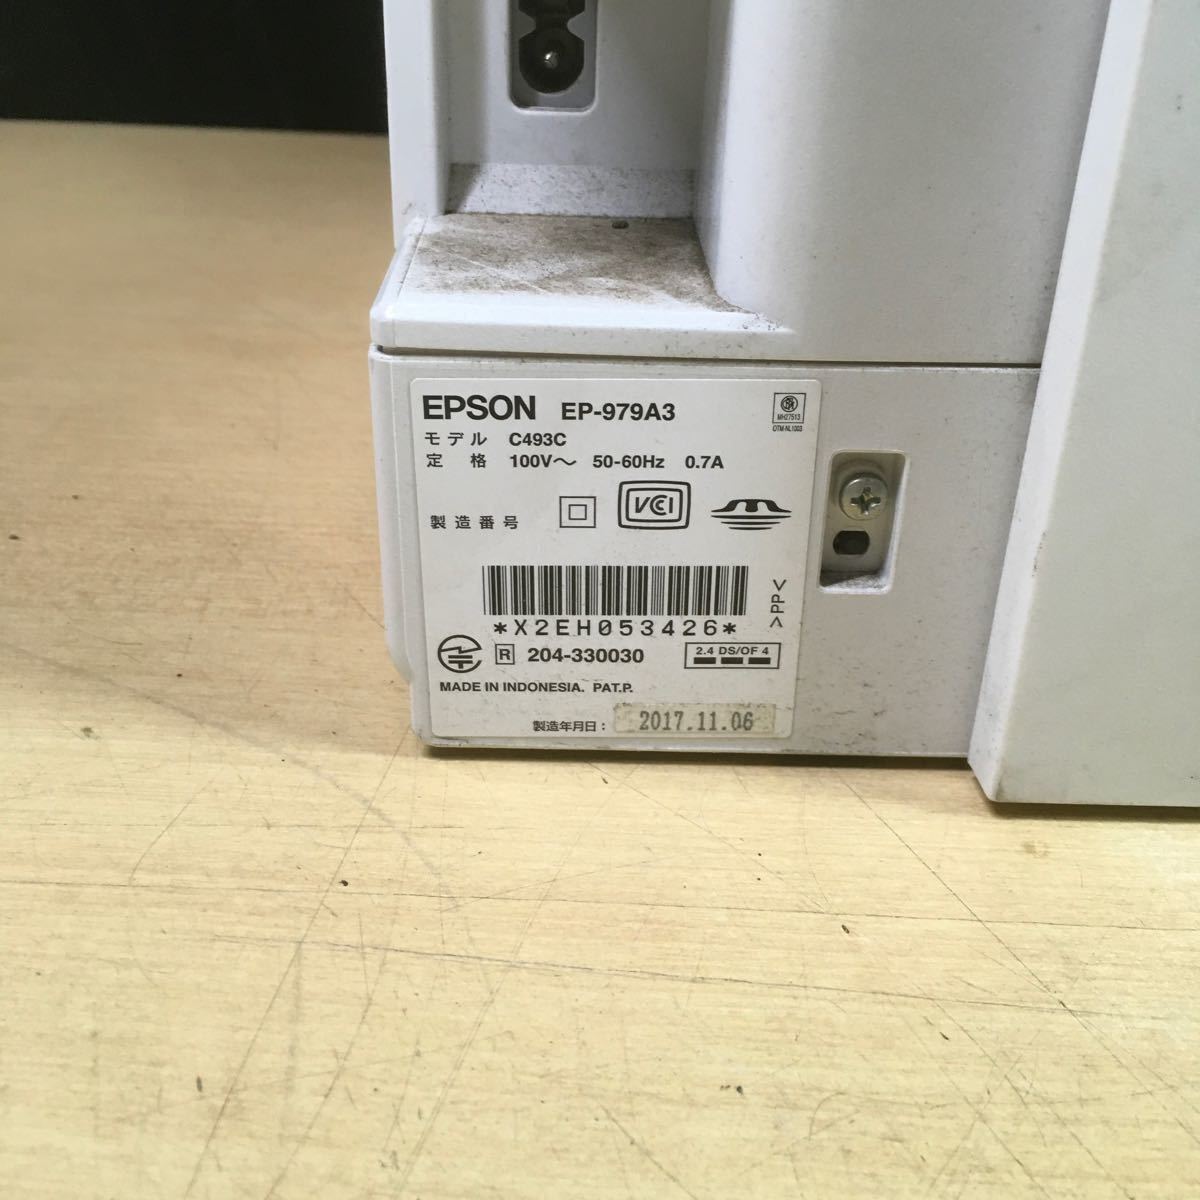 (011909G) EPSON EP-979A3 インクジェットプリンタ 複合機 本体のみ ジャンク品_画像4